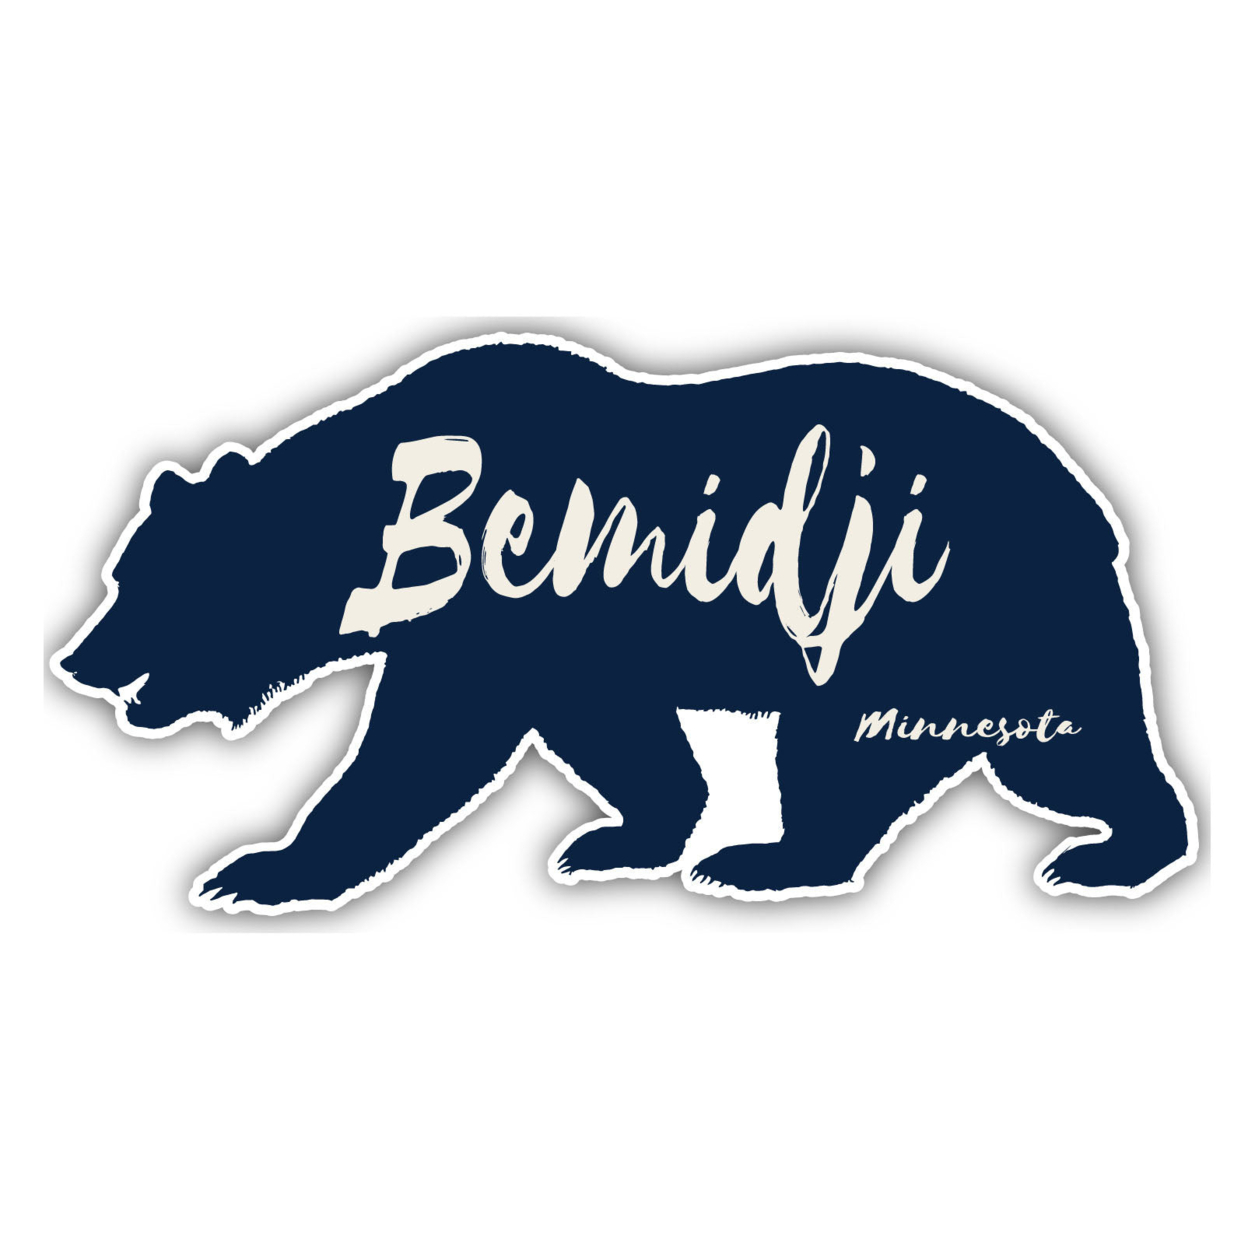 Bemidji Minnesota Souvenir Decorative Stickers (Choose Theme And Size) - Single Unit, 12-Inch, Tent